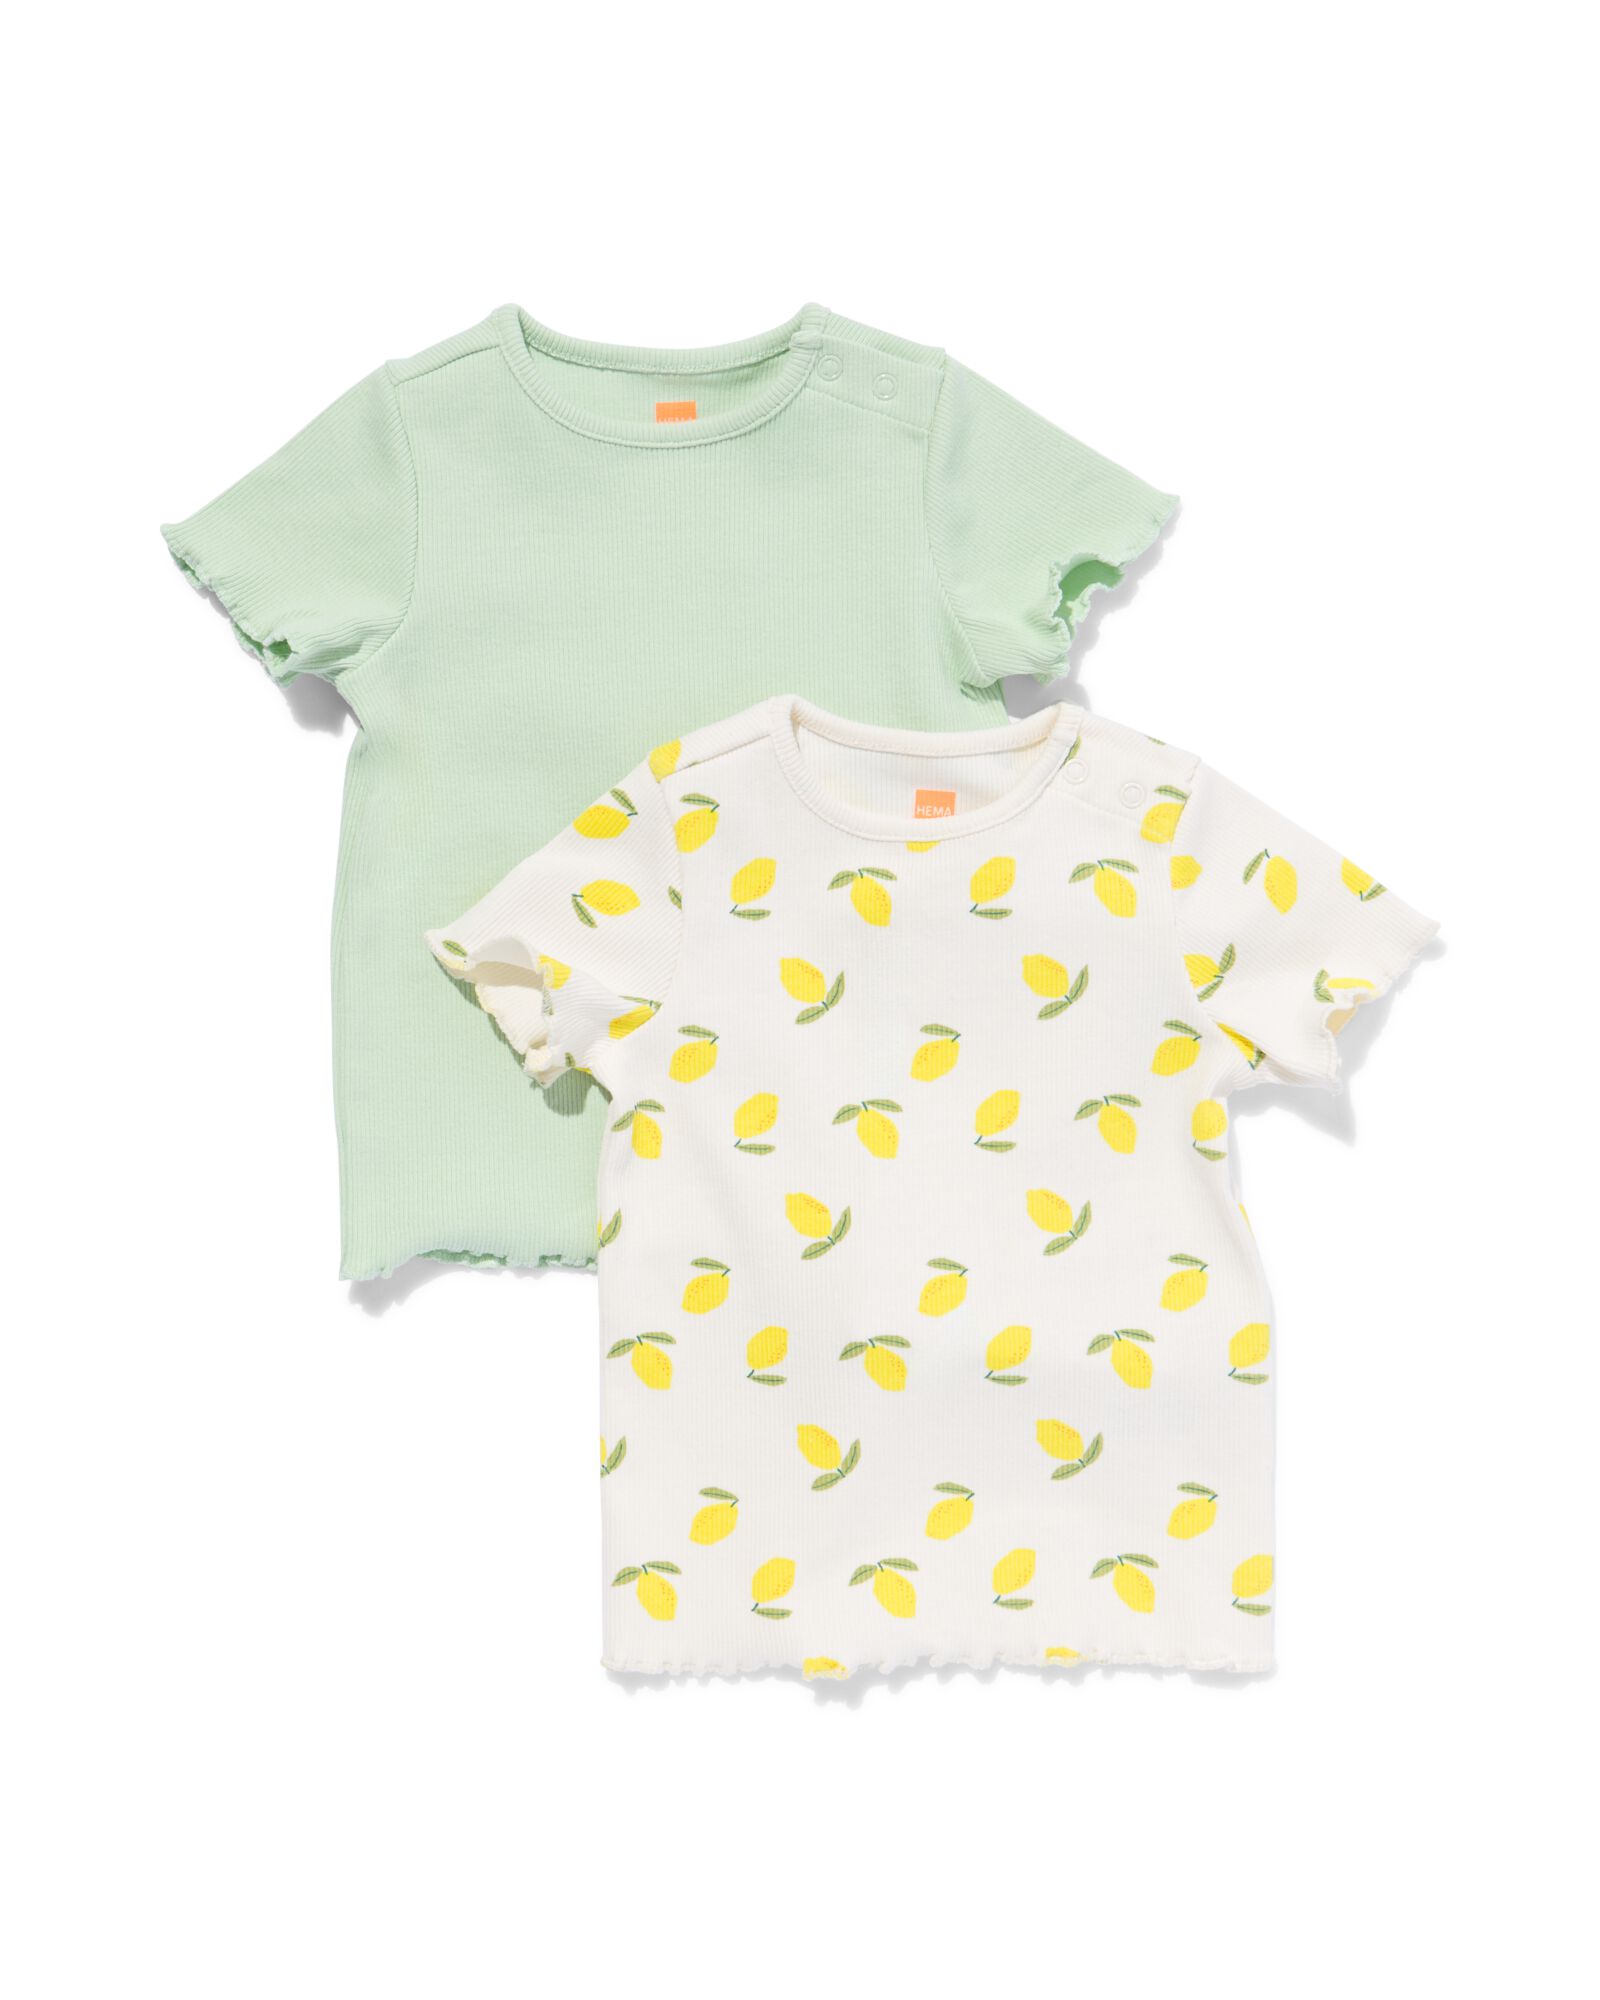 Image of HEMA Baby T-shirts Rib Citroen - 2 Stuks Mintgroen (mintgroen)